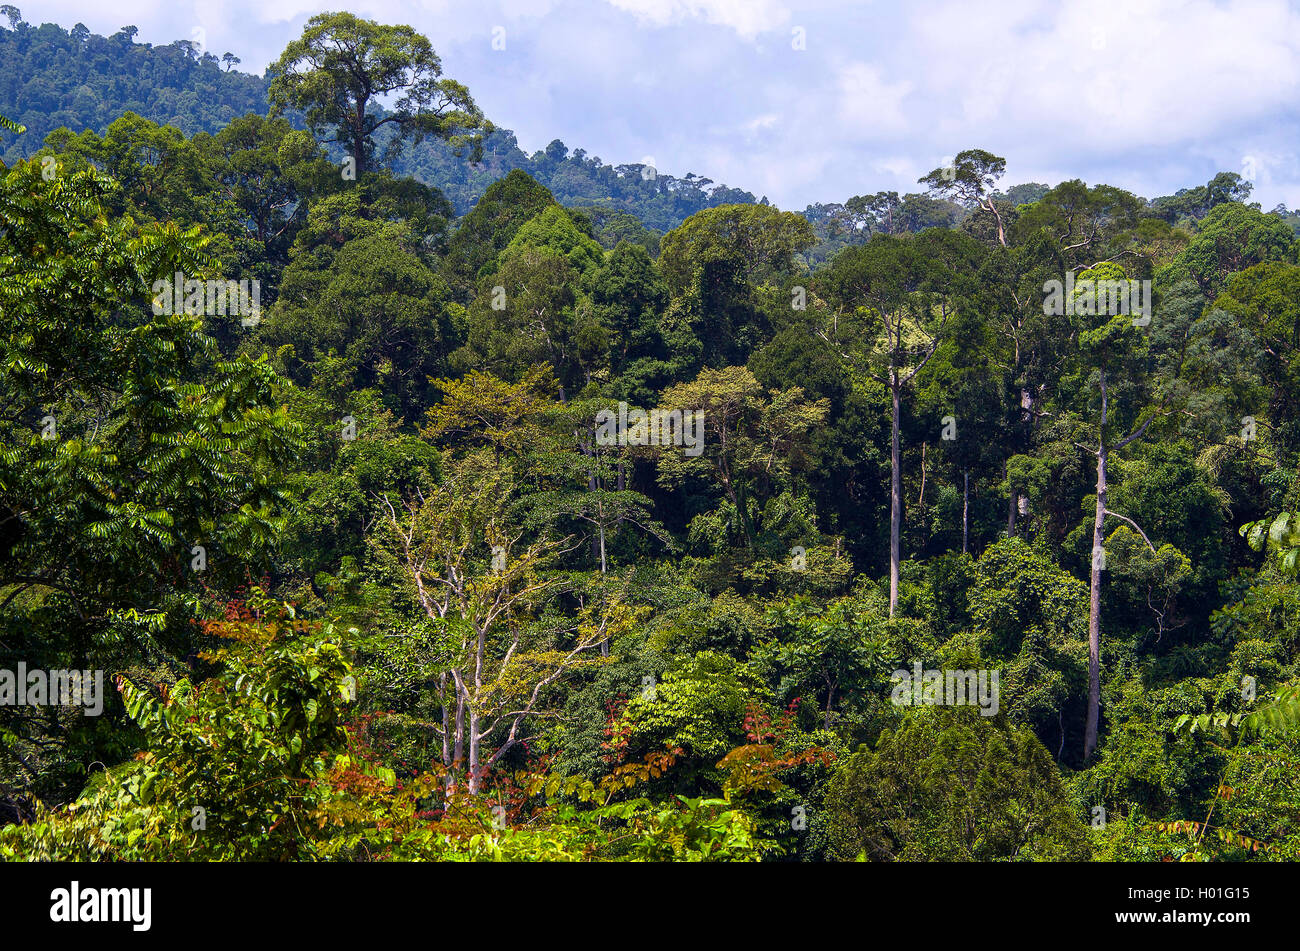 Regenwald mit verschiedenartigen Fluegelfruchtgewaechsen bei Tabin, Malesia, Borneo Sabah | diverse dipterocarp rainforest a Foto Stock